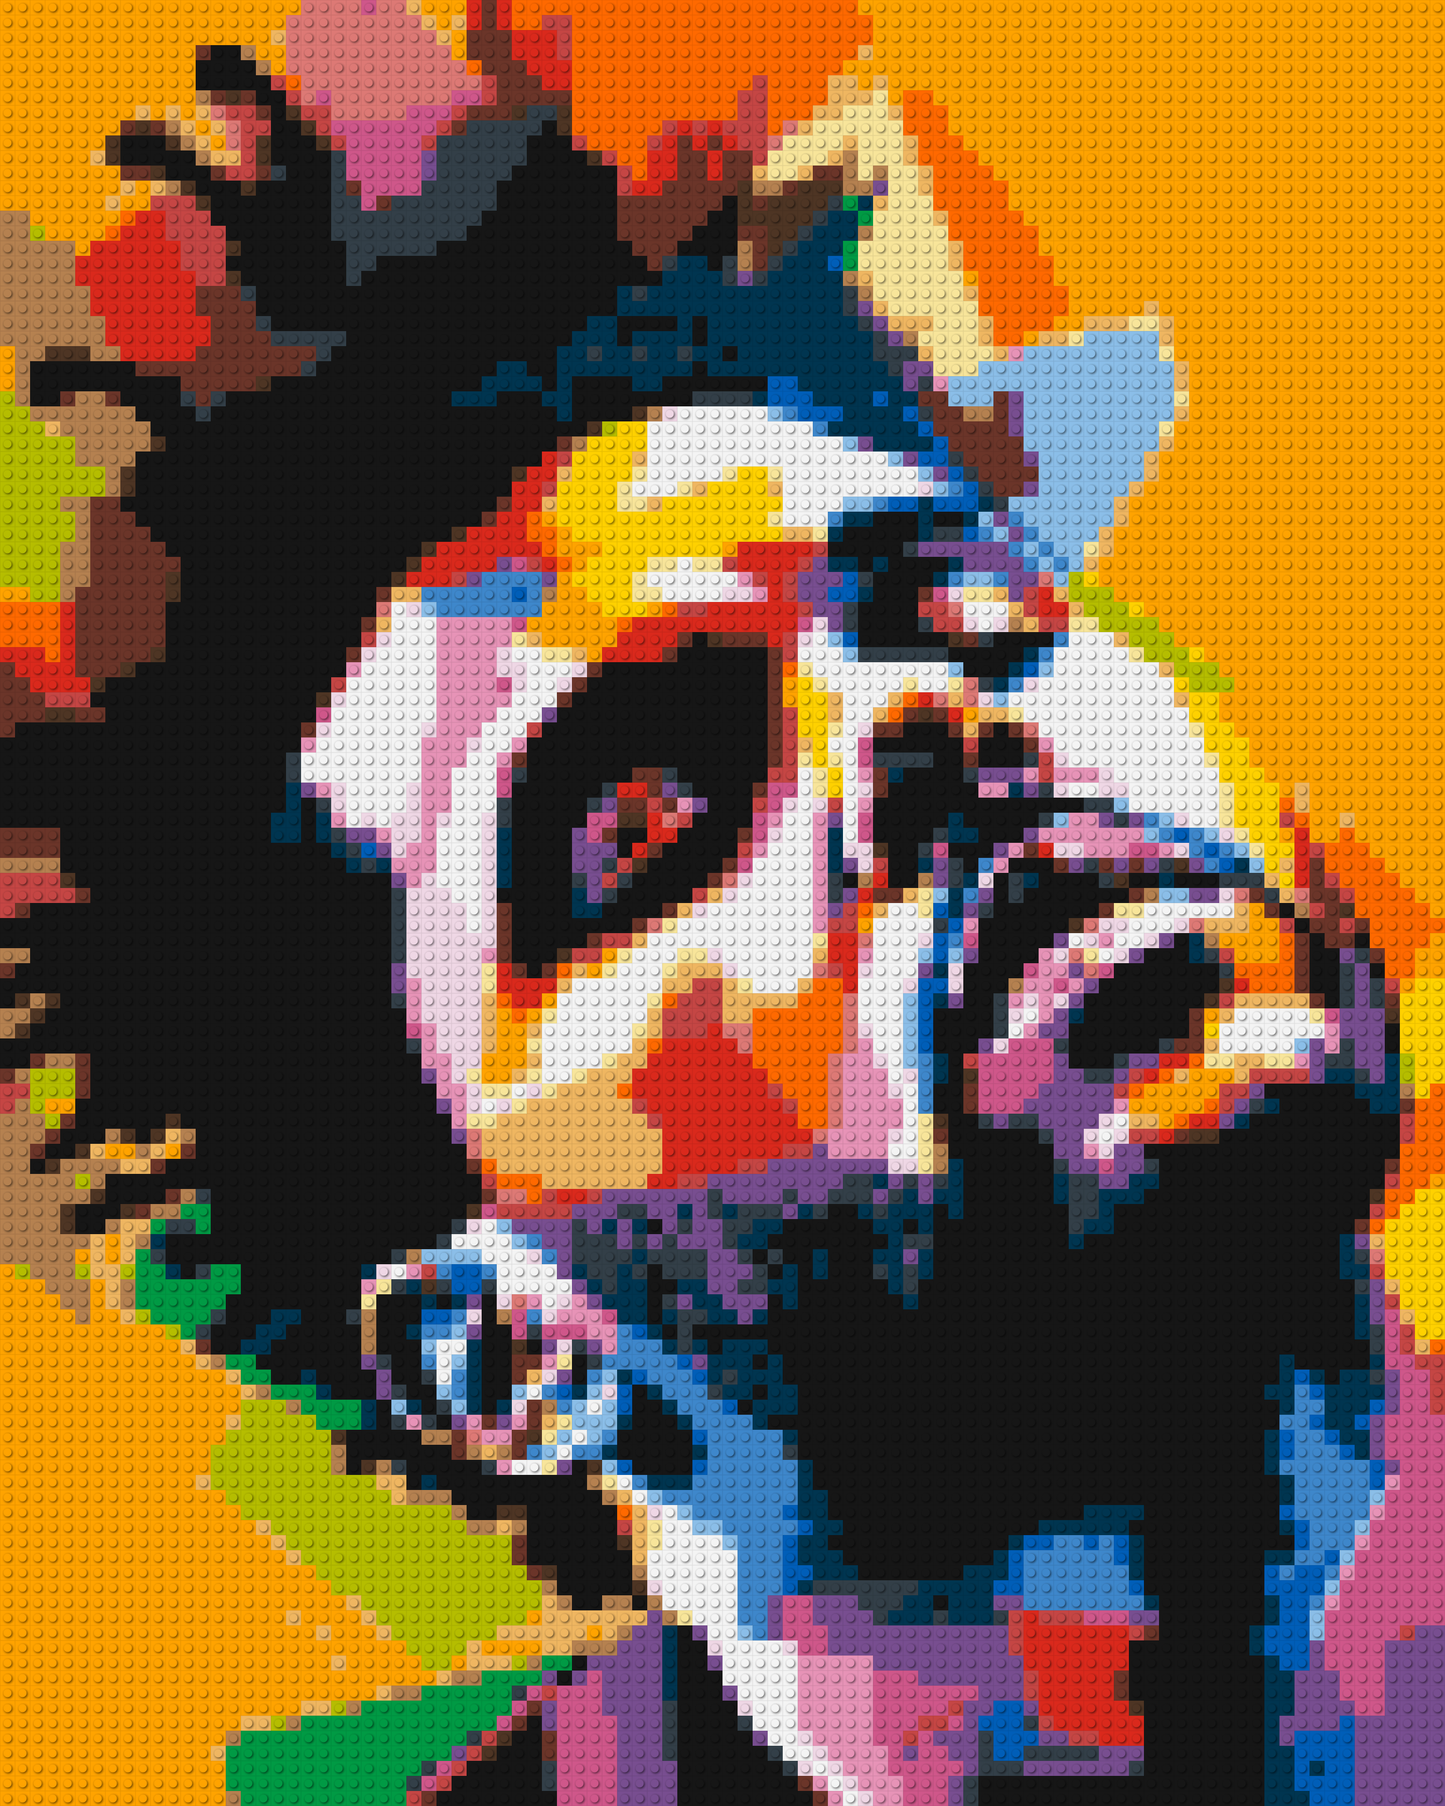 The Weeknd - Brick Art Mosaic Kit